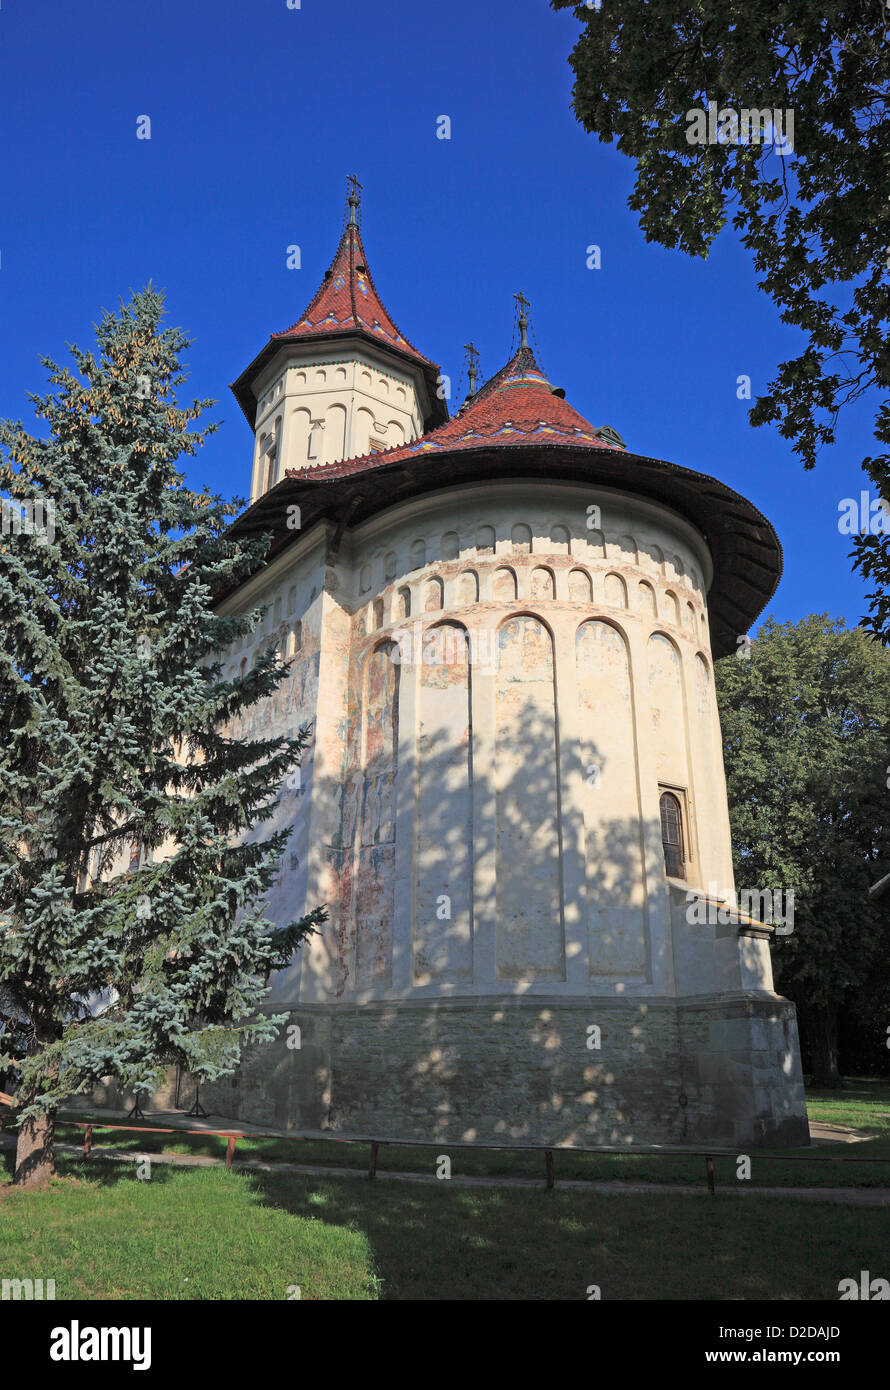 Flodor iancu, Suceava, Romania, kloster st. gheorghe, biserica sf. gheorghe mirauiti, in Suceava, patrimonio mondiale dell UNESCO Foto Stock